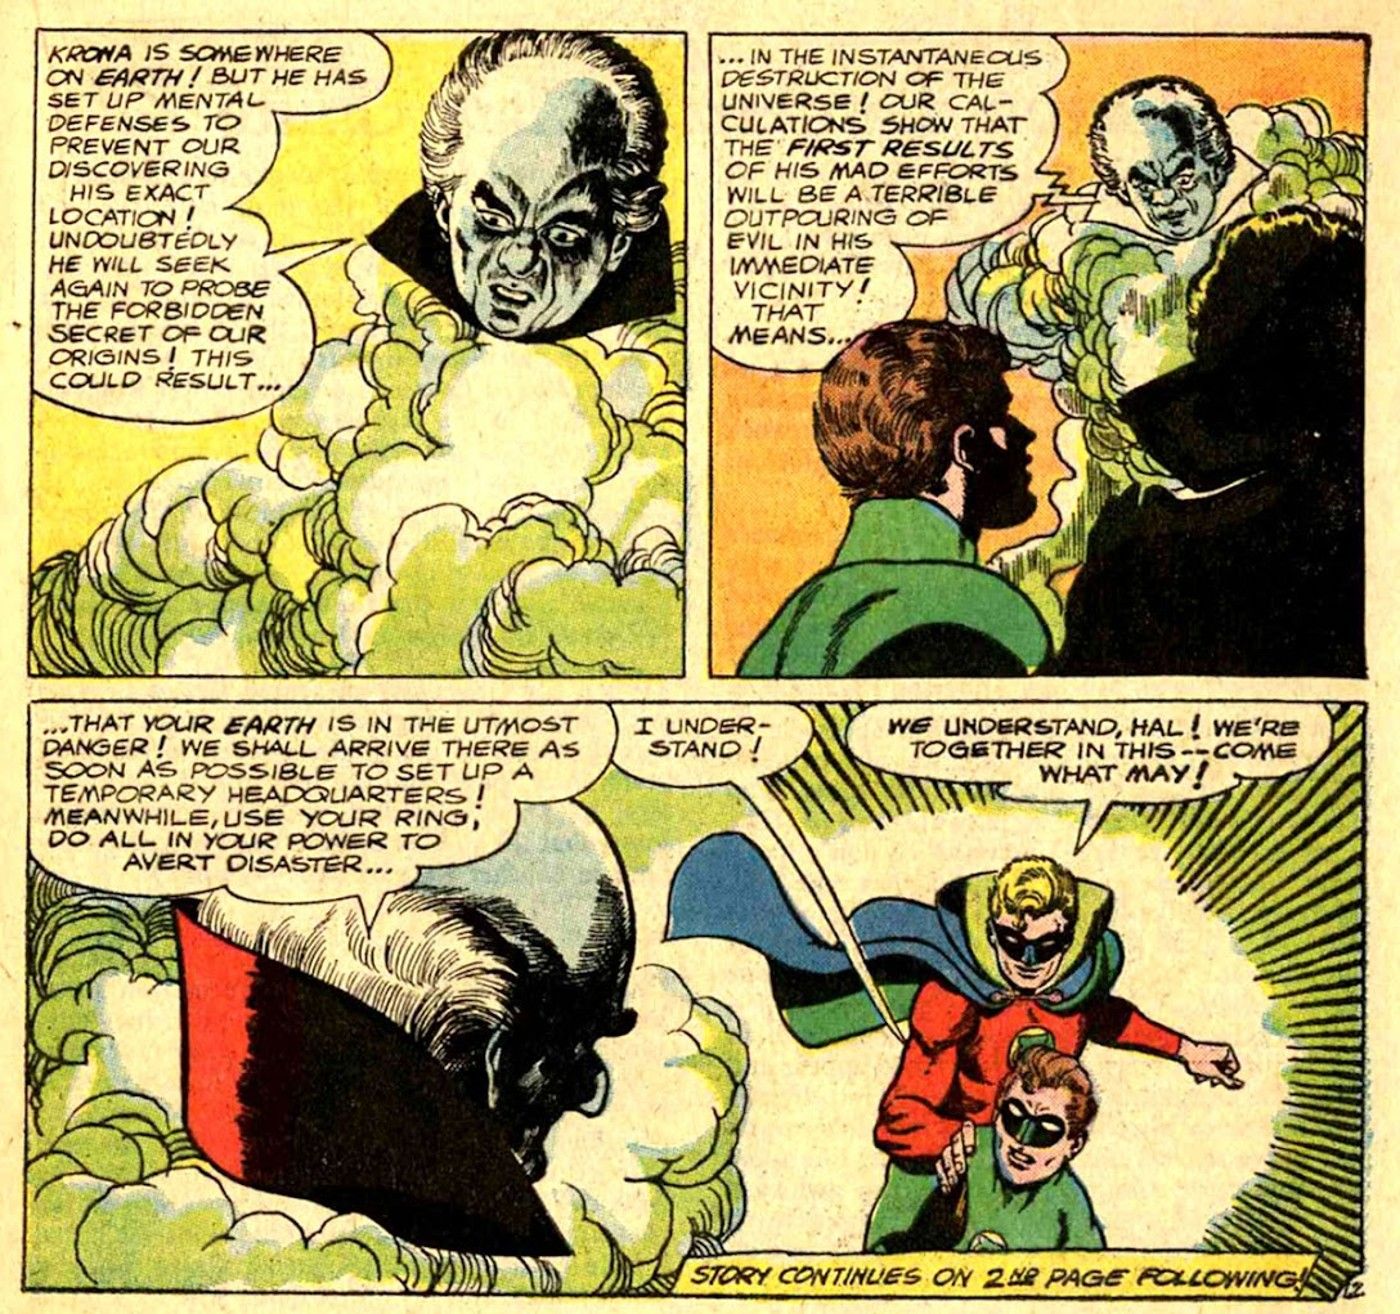 Comic book panels: a Guardian of the Universe warns Green Lanterns Hal Jordan and Alan Scott about Krona.